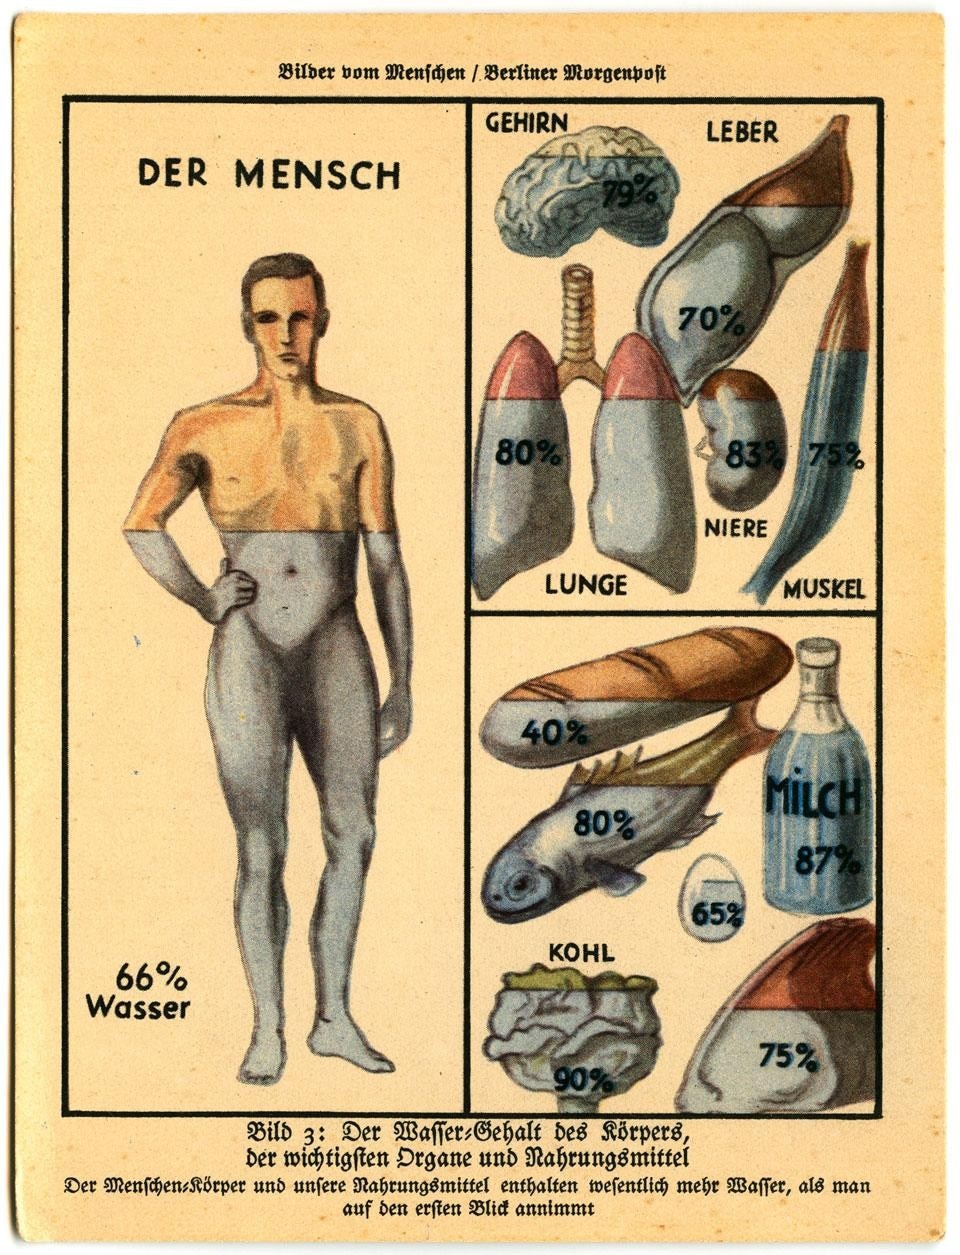 <i>Der Wasser</i>,
da: <i>Bilder vom Menschen</i>
(1931), illustrazione
pubblicata in origine nel
<i>Berliner Morgenpost</i>